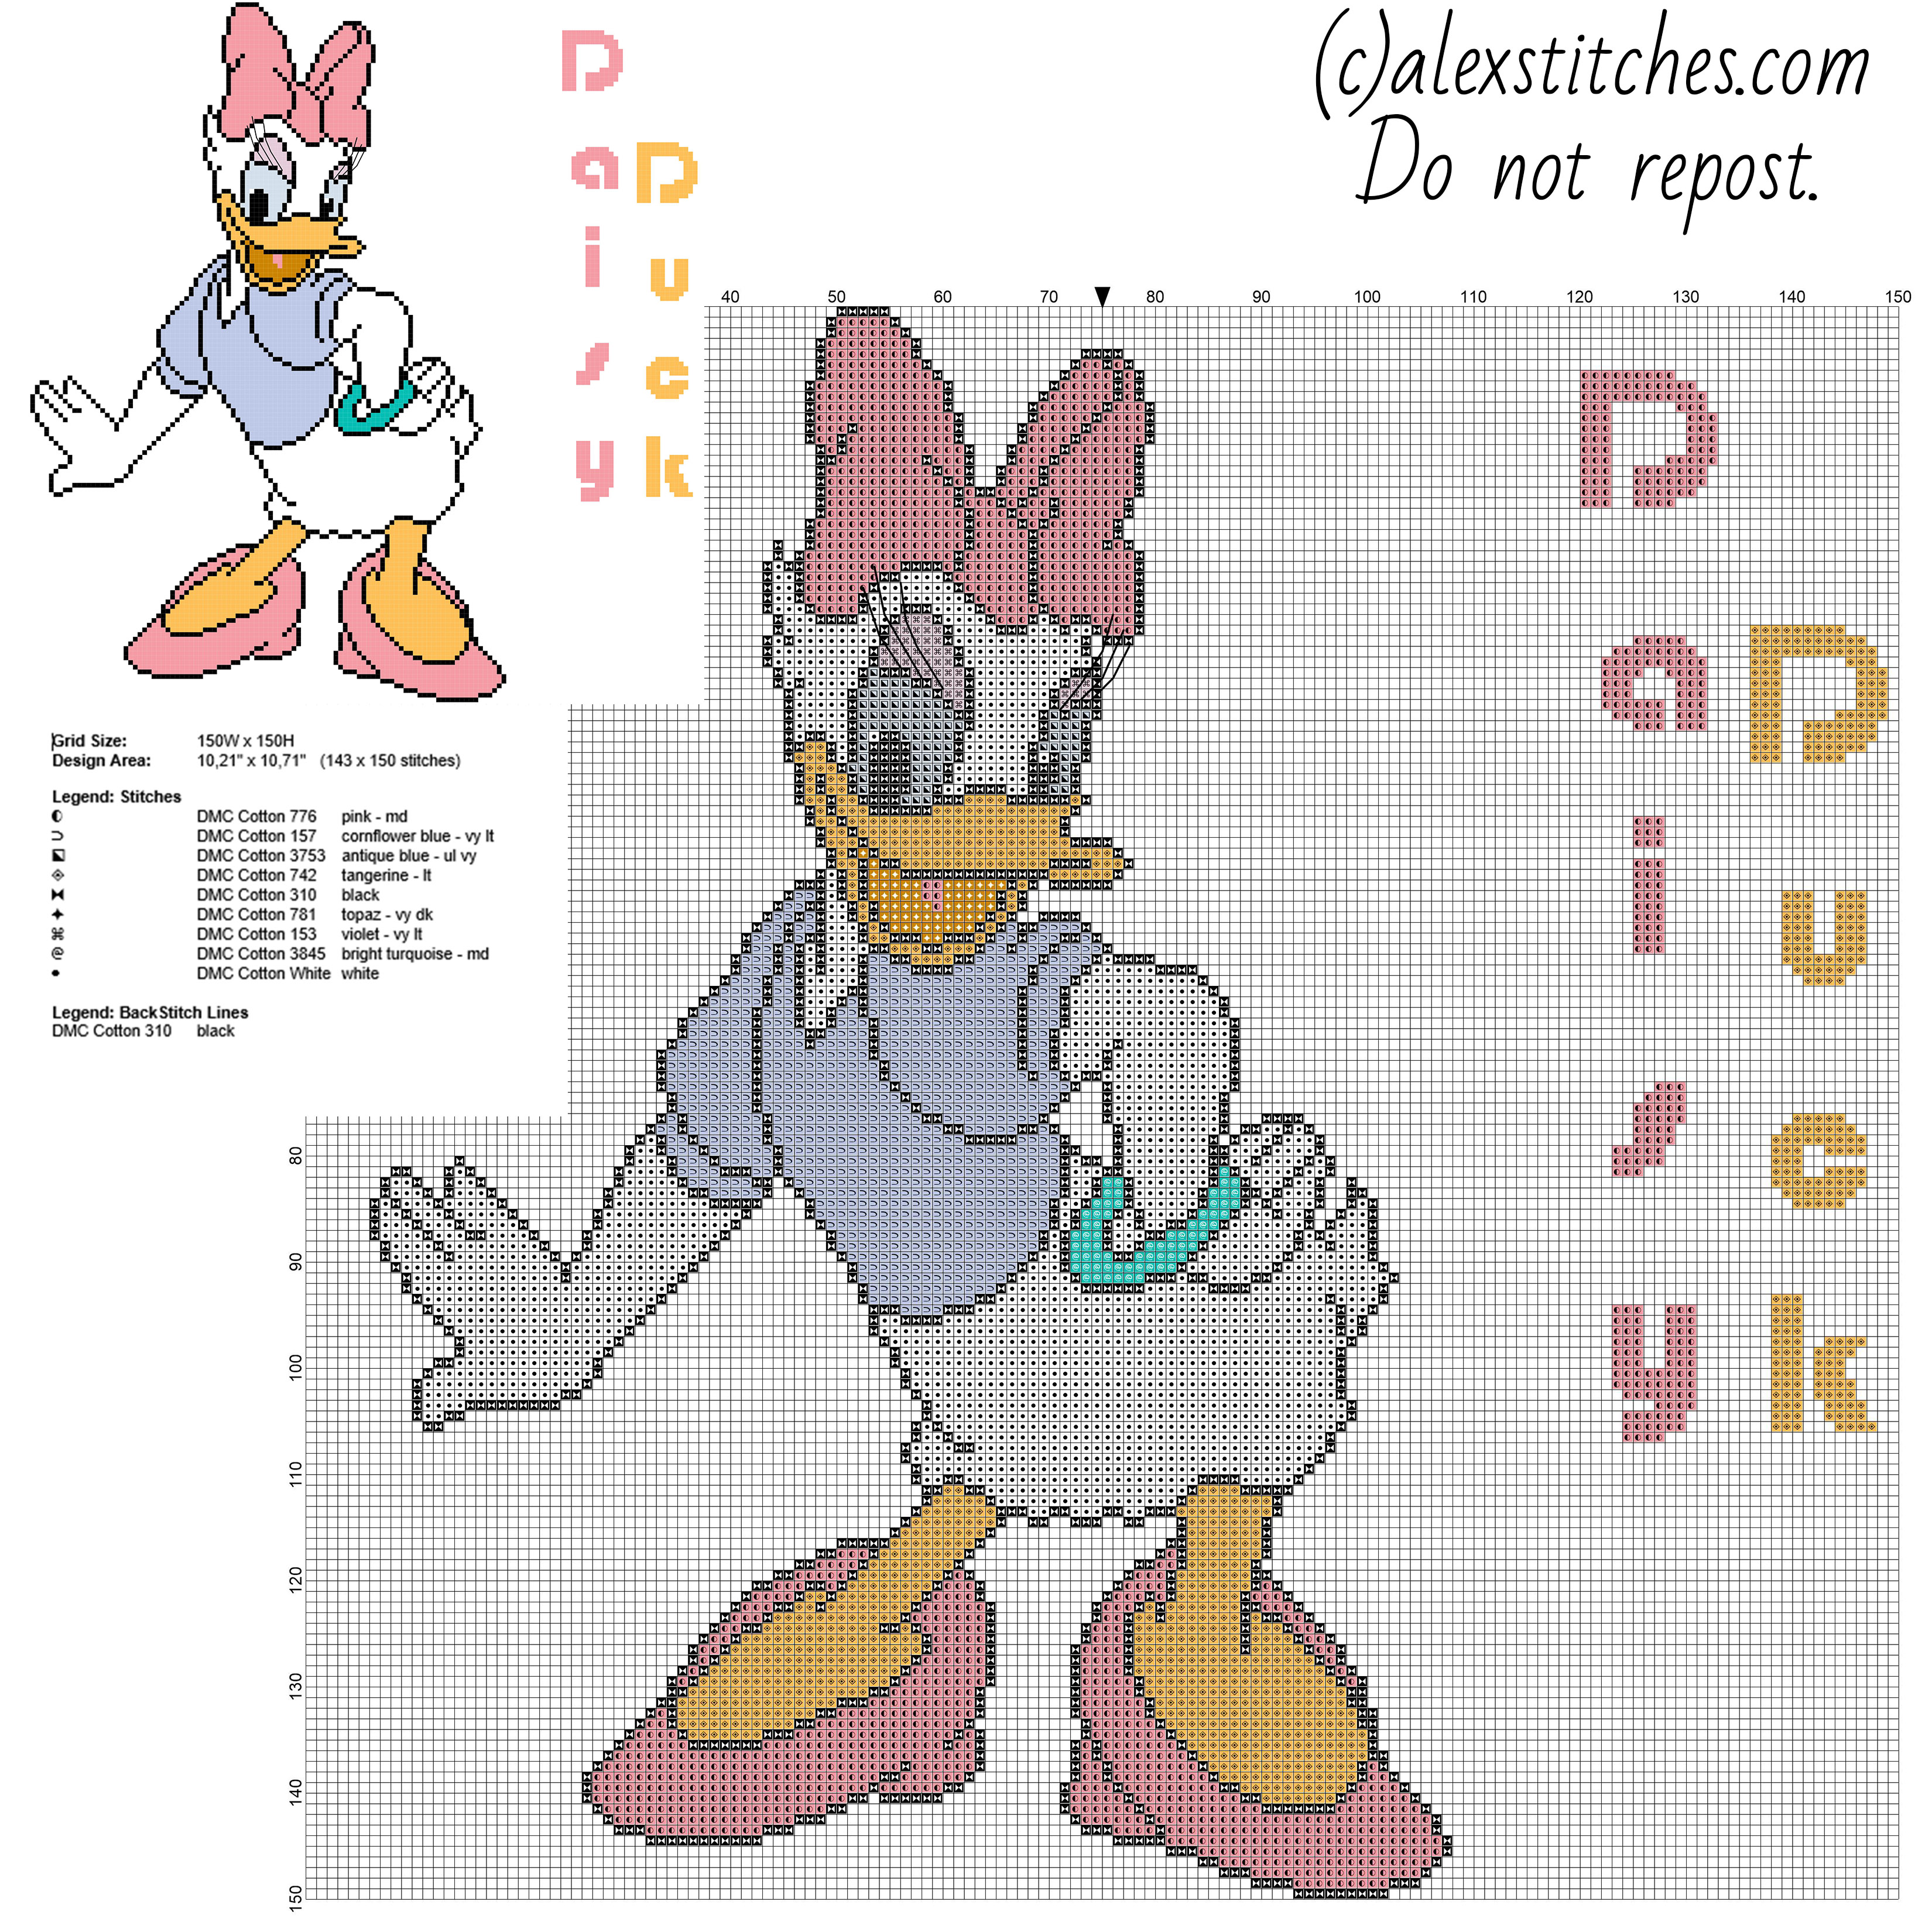 Disney Daisy Duck character big size free cross stitch pattern 143 x 150 stitches 9 DMC threads